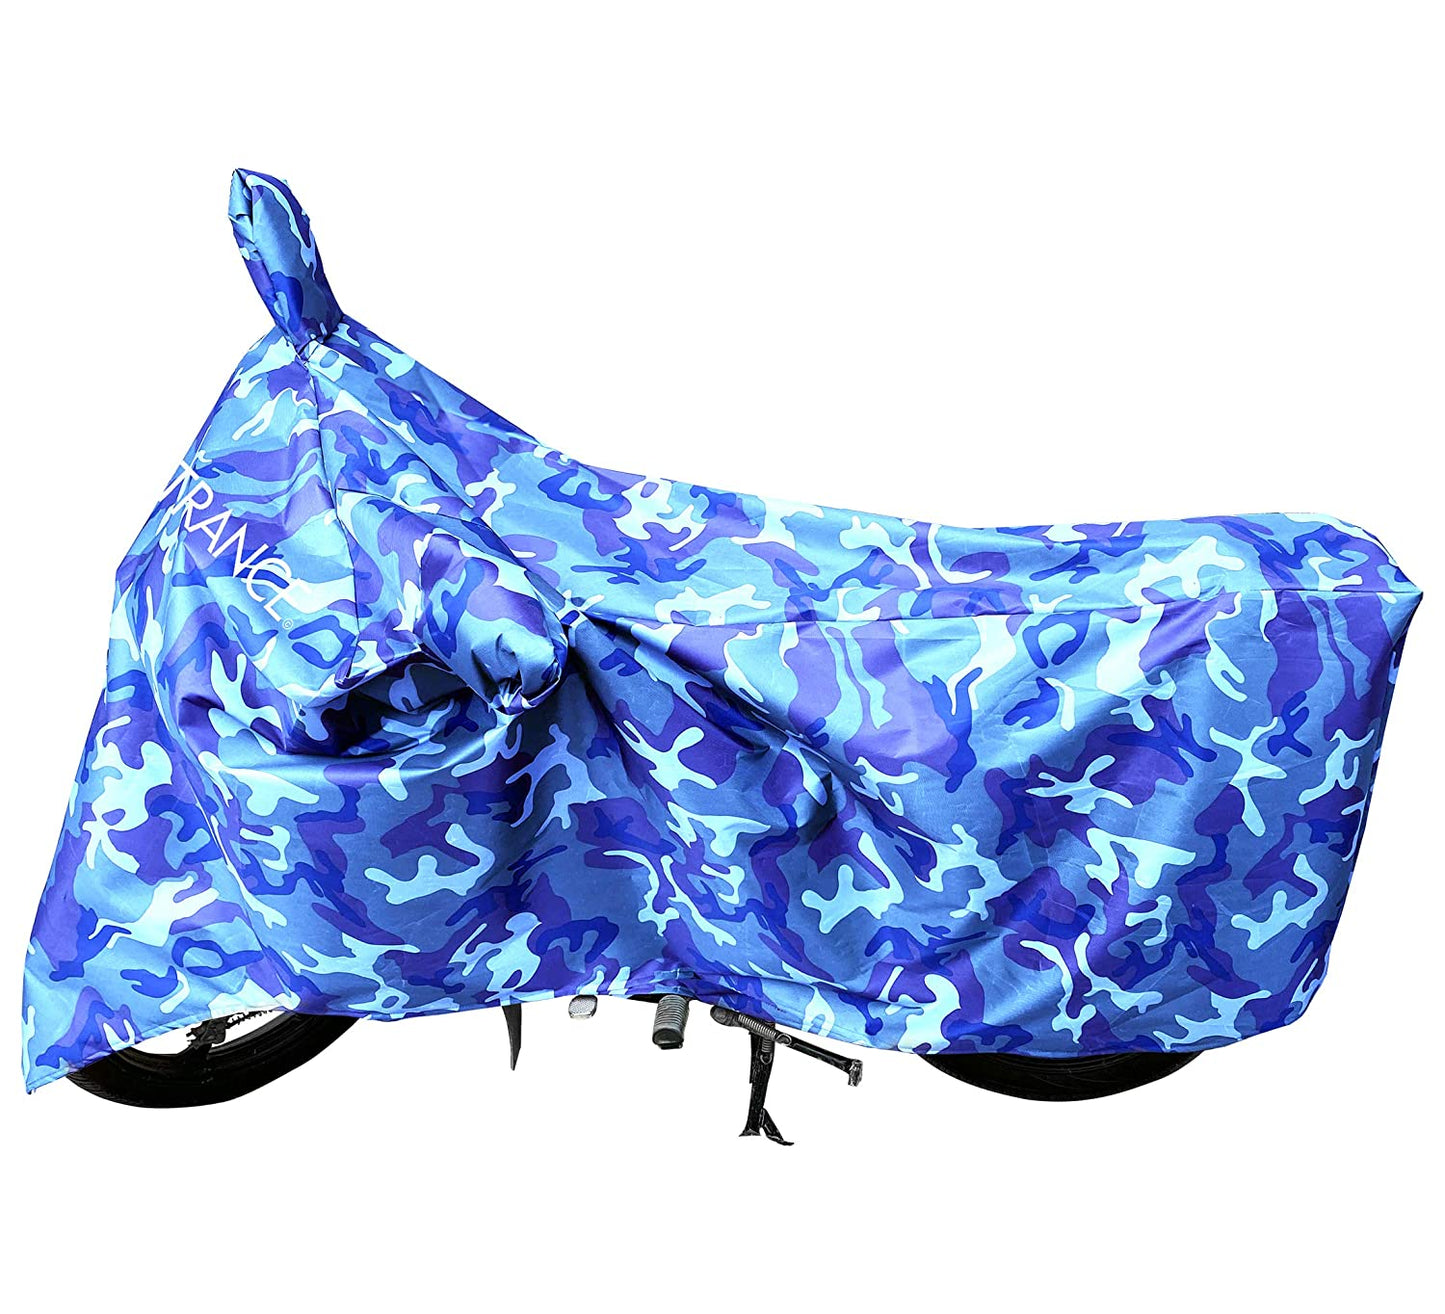 MotoTrance Jungle Bike Body Covers For Bajaj Chetak - Interlock-Stitched Waterproof and Heat Resistant with Mirror Pockets